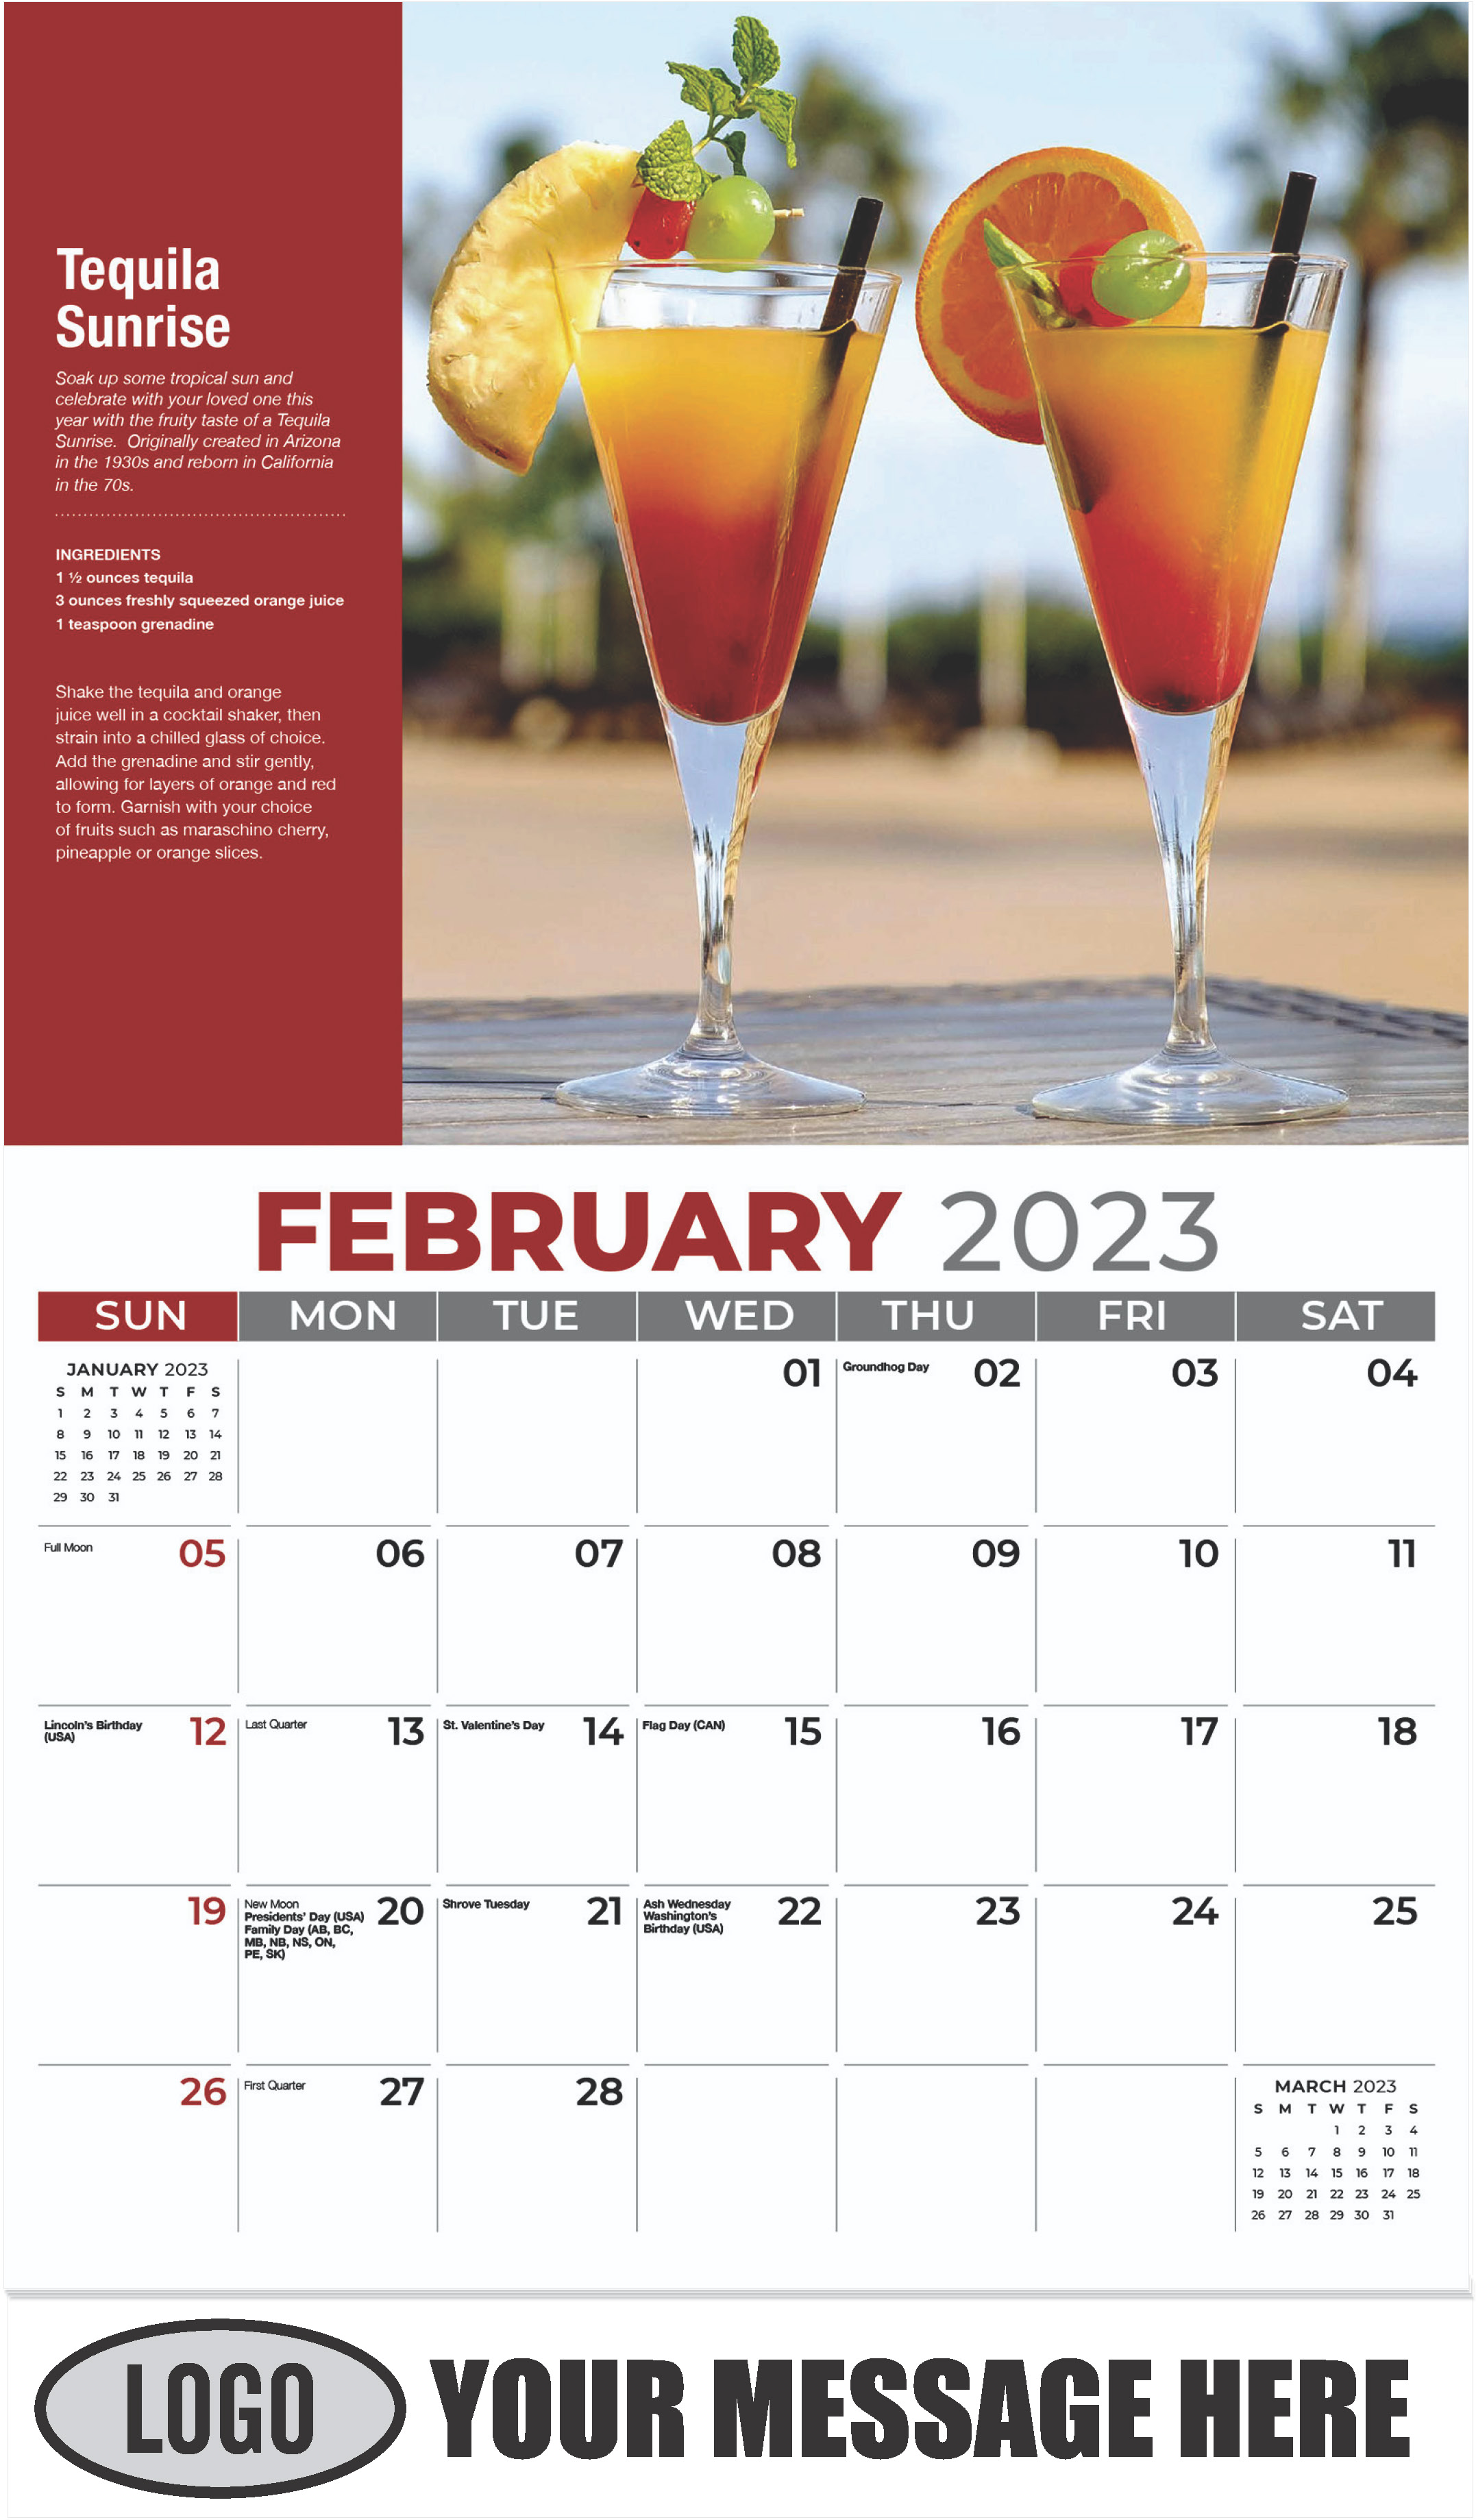 Tequila Sunrise - February - Happy Hour Cocktails 2023 Promotional Calendar